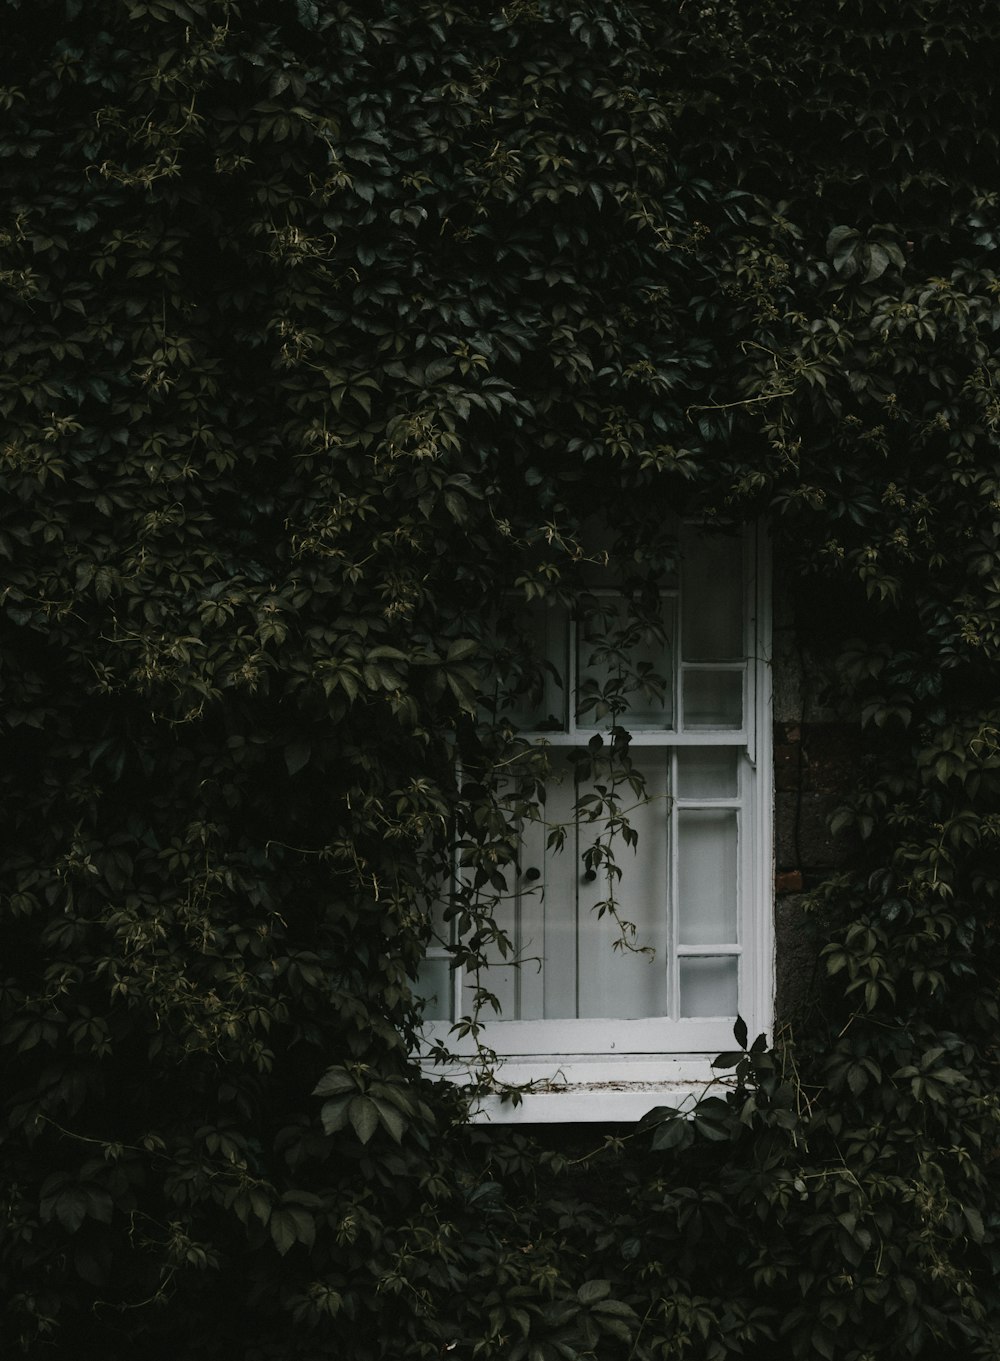 ventana de madera blanca rodeada de enredaderas verdes